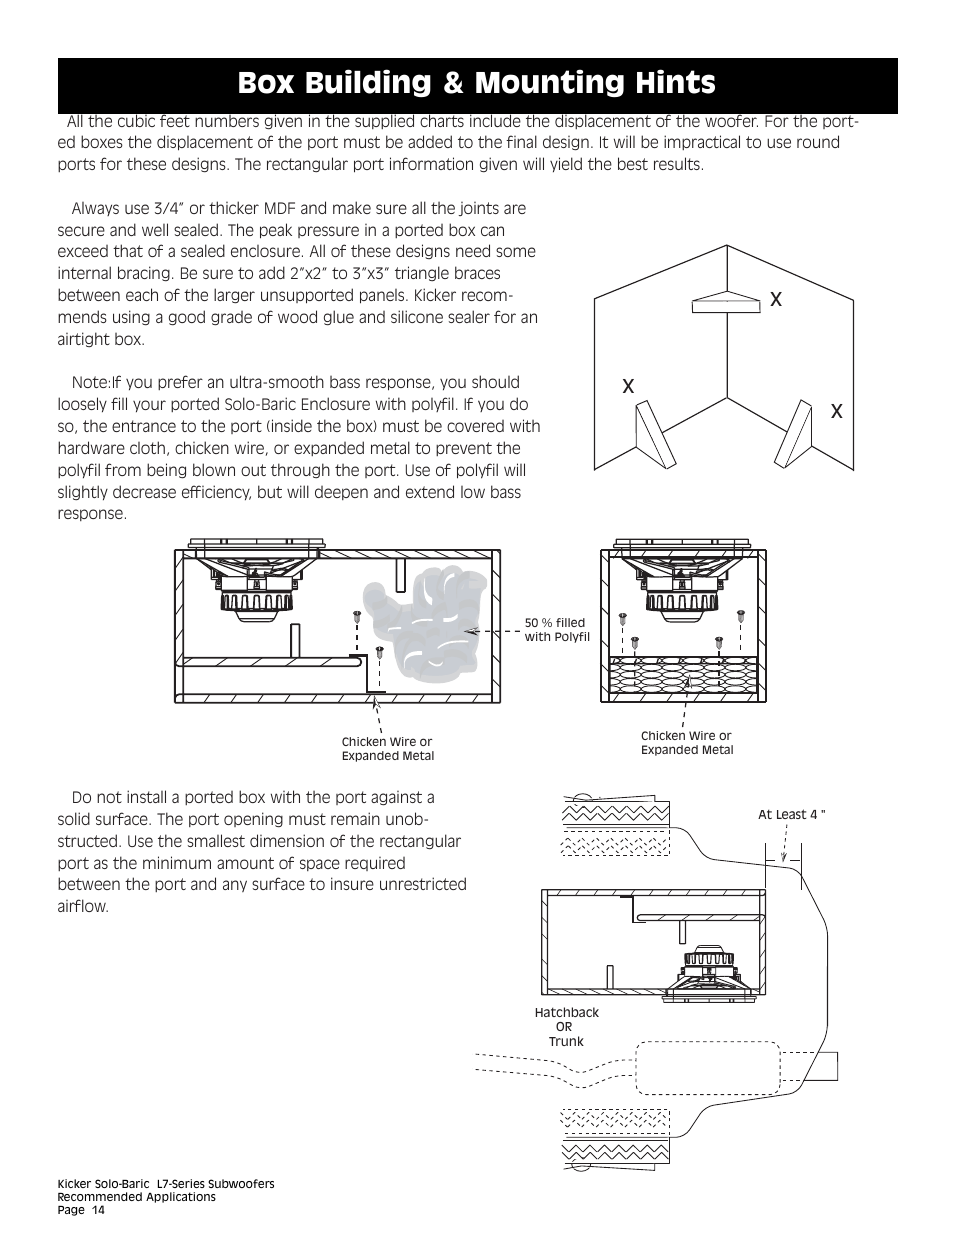 Design Diagram Kicker L7 15 Wiring Diagram Full Version Hd Quality Wiring Diagram Inflatablesales Sansecondoweb It